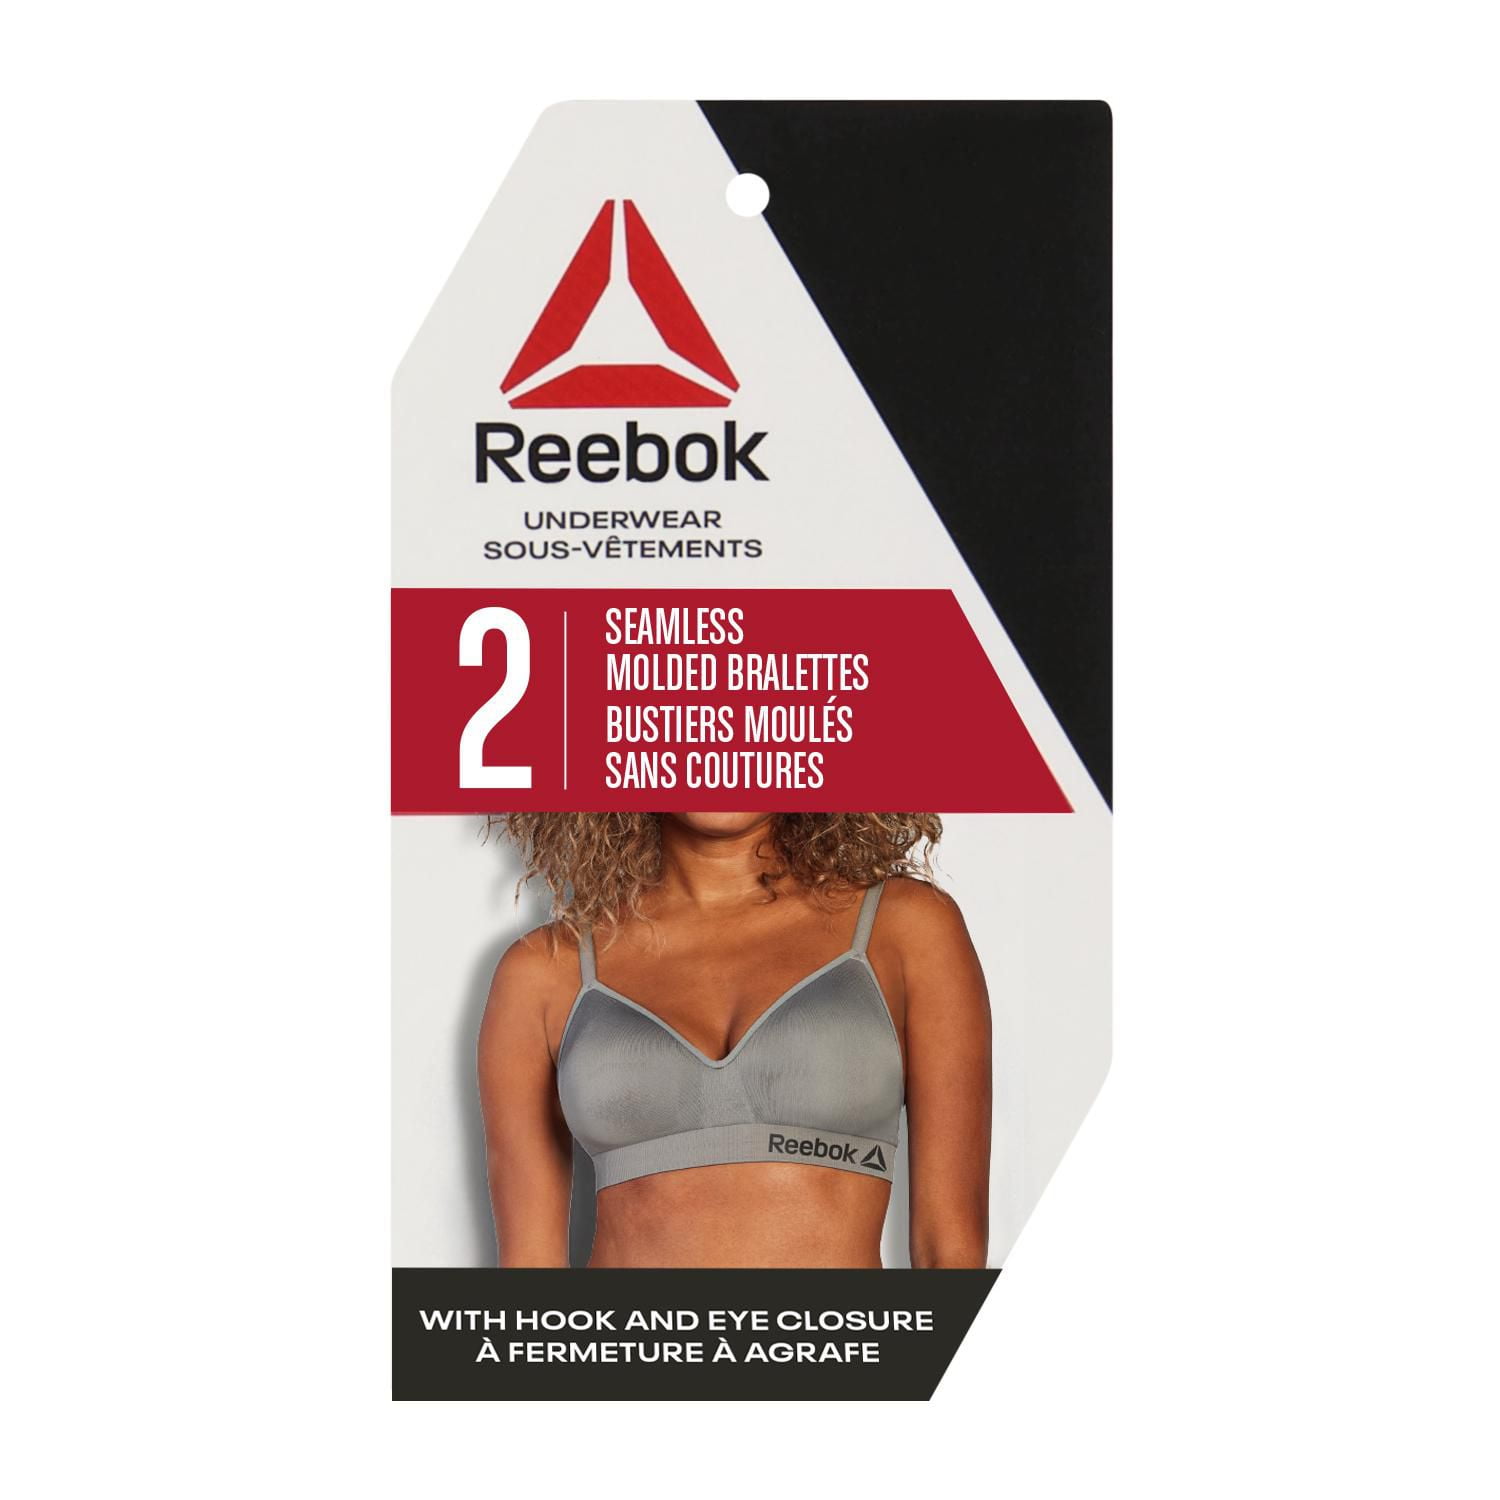 Reebok Ladies' Underwear 2 Pack Performance Seamless Molded Bralettes 